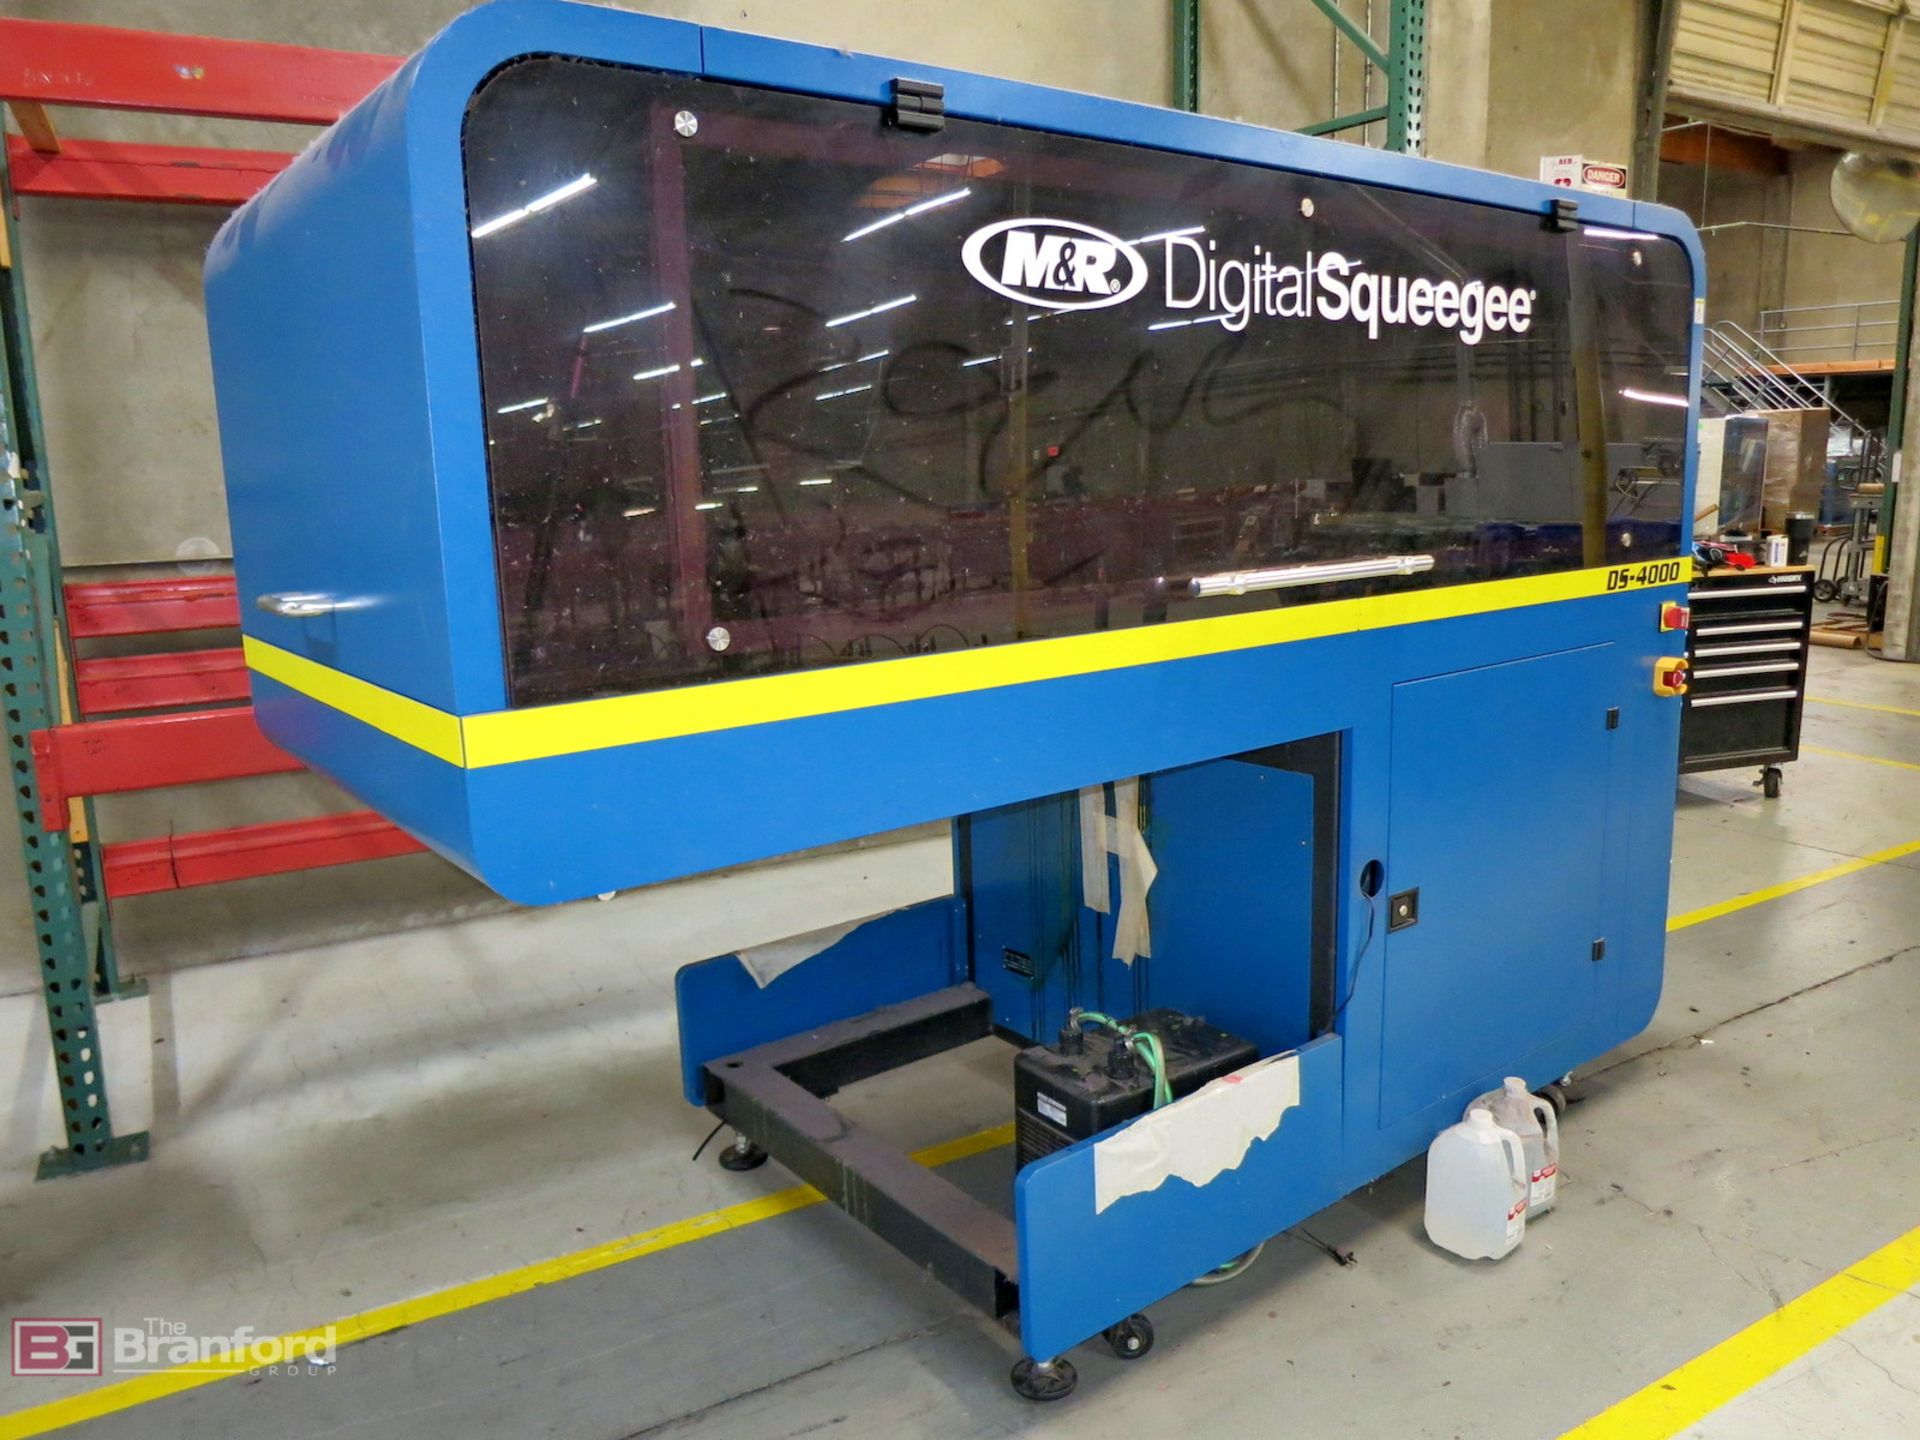 M&R DS-4000 Digital Squeegee hybrid printing system